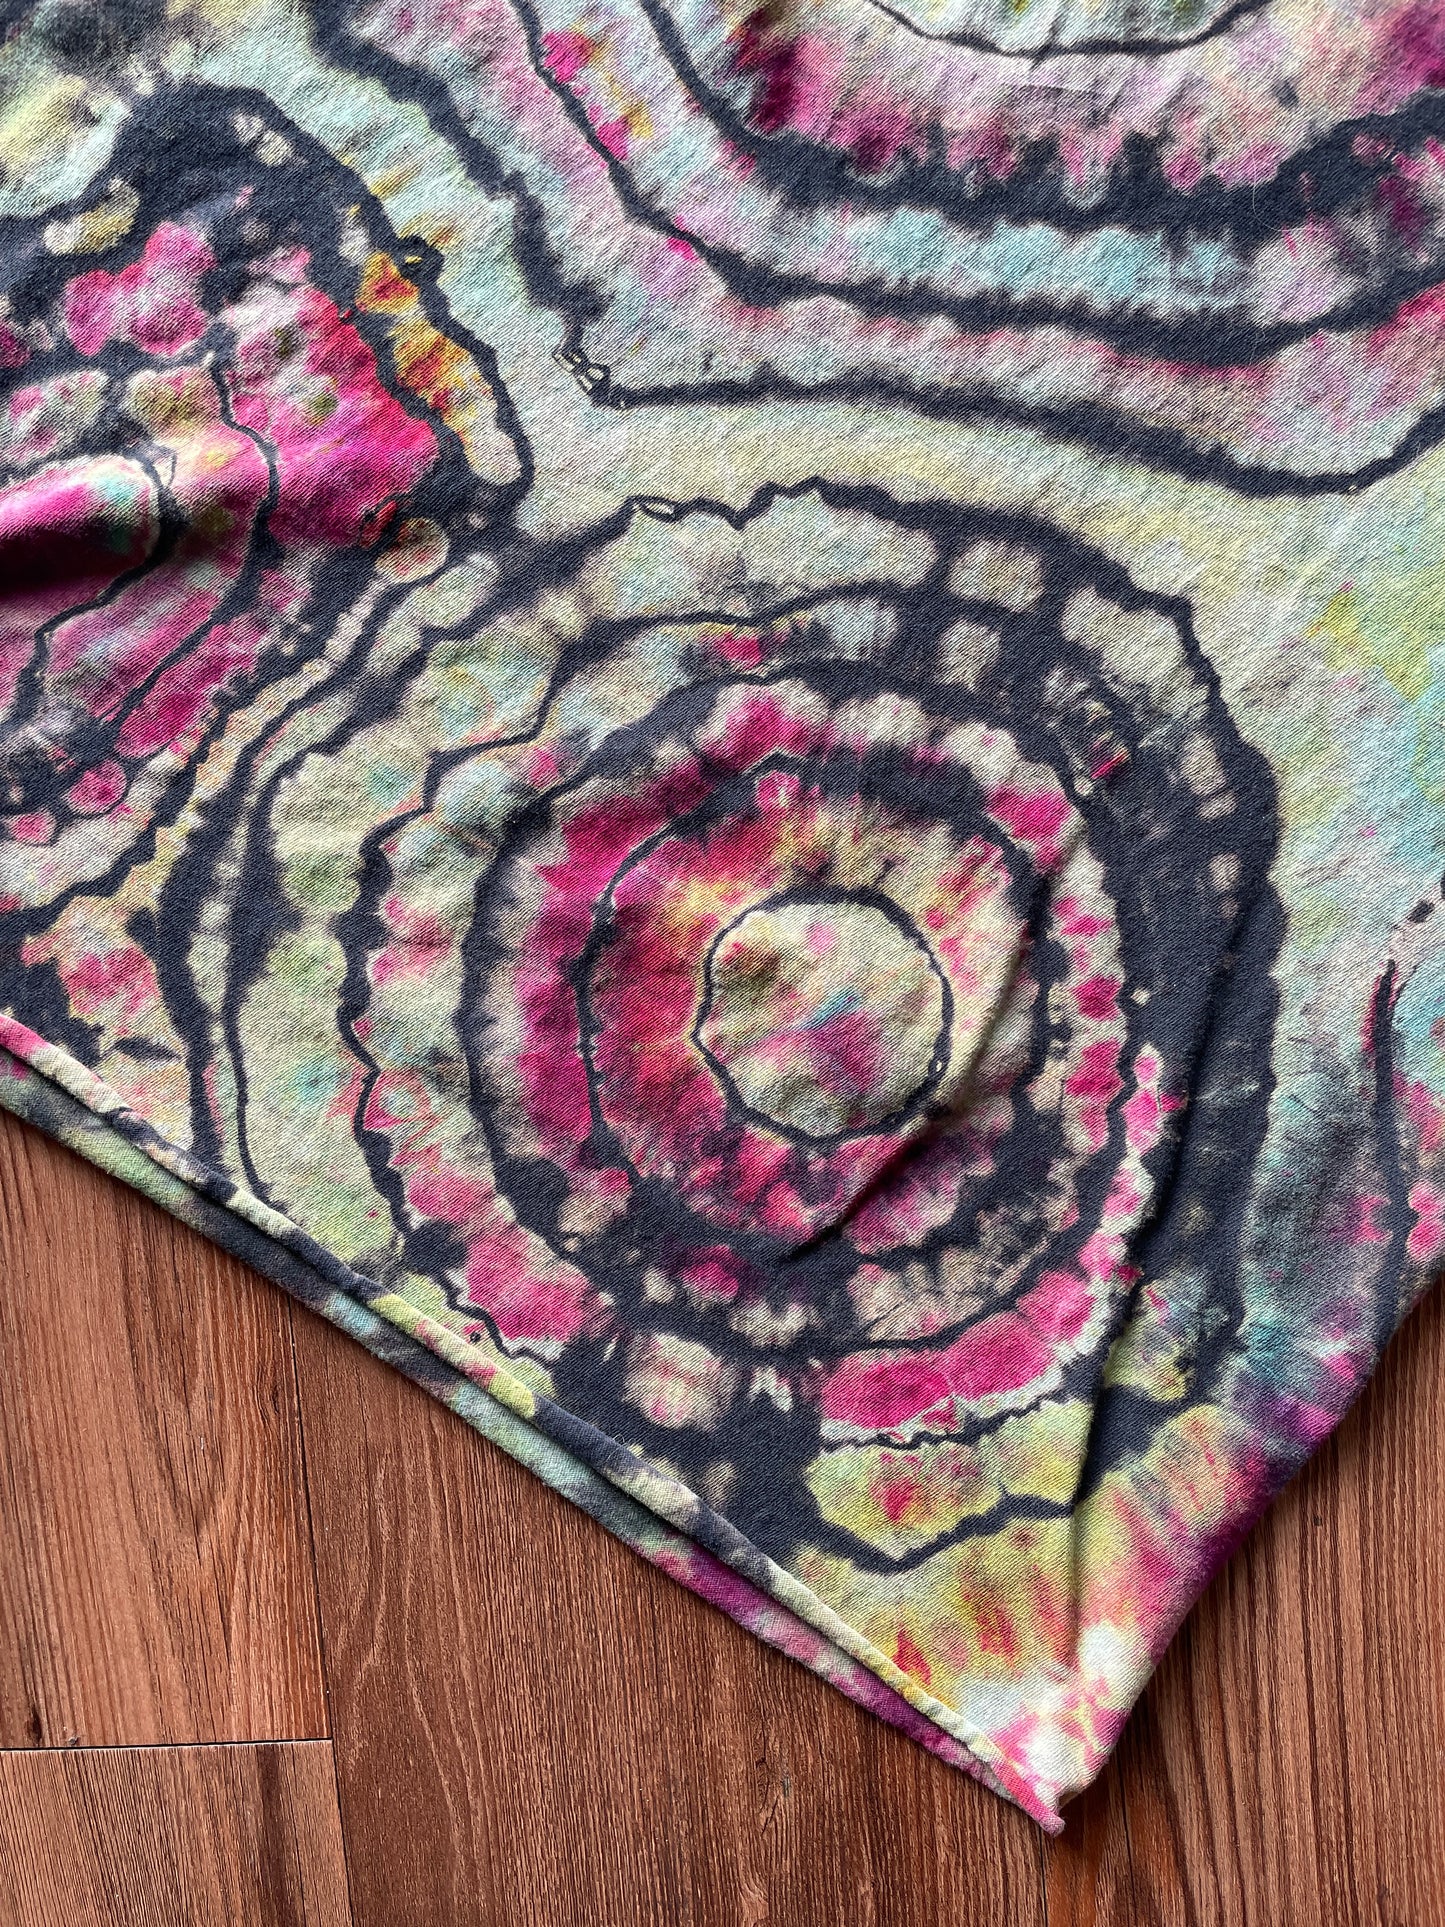 Medium Women’s The Doors Jim Morrison Handmade Reverse Tie Dye Crop Top | Pink, Blue, and Yellow Geode Tie Dye Short Sleeve